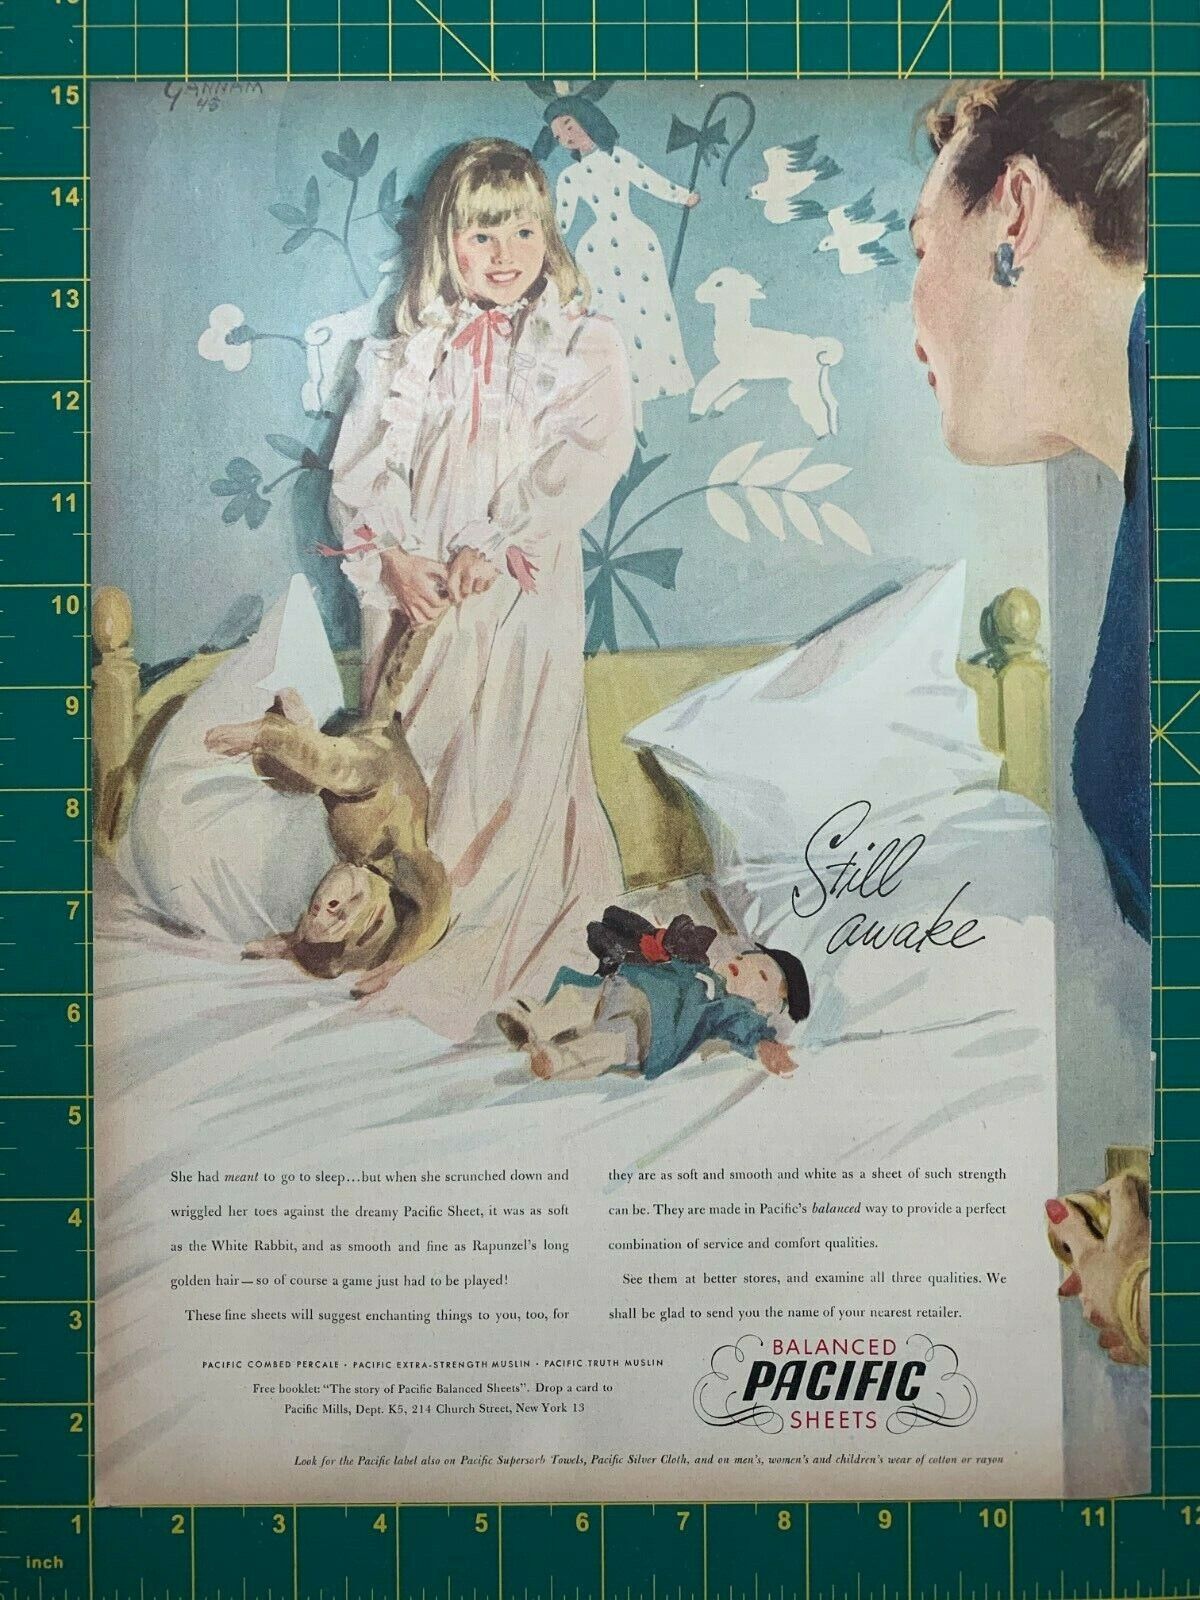 1948 Pacific Balanced Sheets Bedding Linens Vintage Print Ad